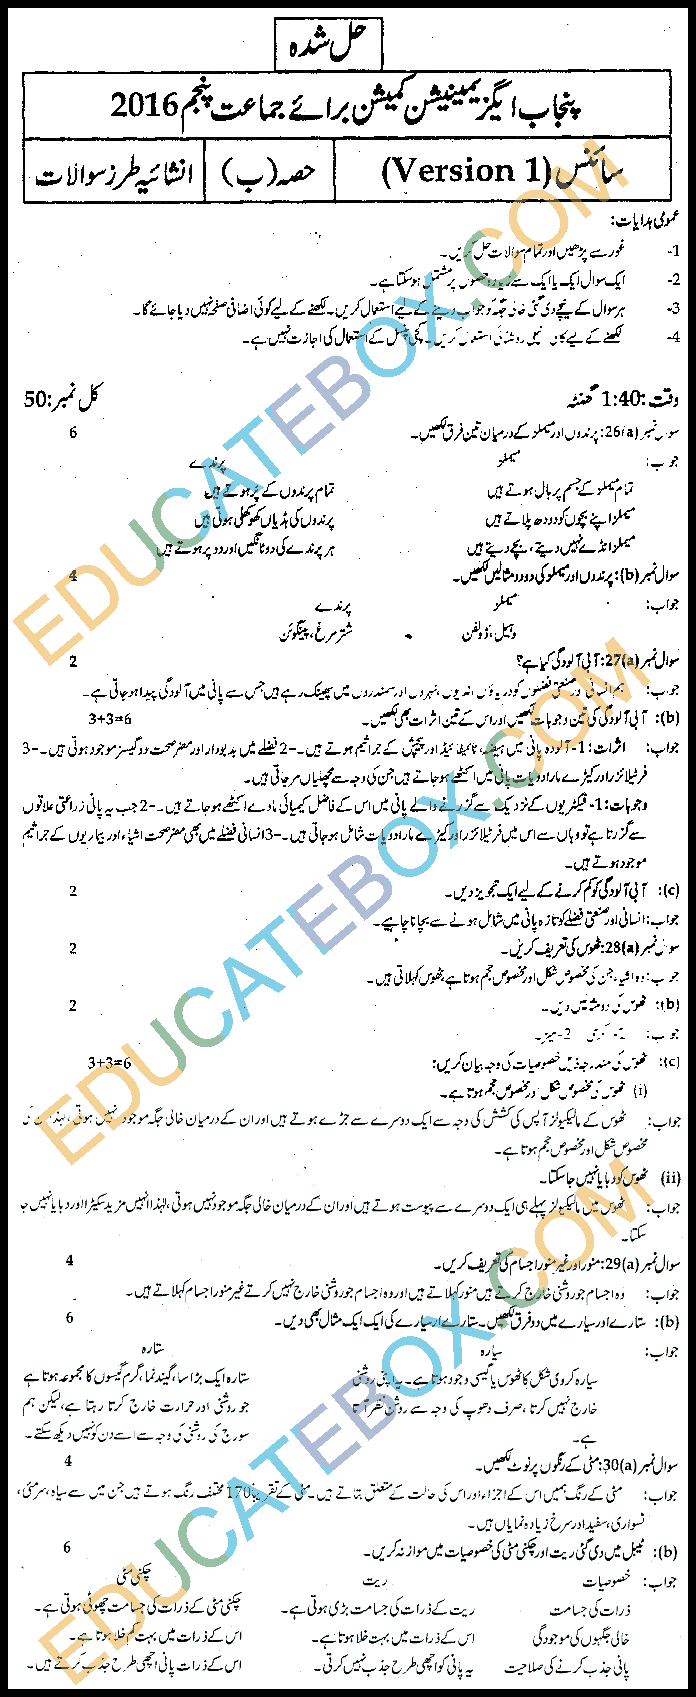 Past Paper Science (Urdu Medium) 5th Class 2016 Punjab Board (PEC) Solved Paper Subjective Type اپٹو ڈیٹ پیپر سائنس اردو میڈیم برائے جماعت پنجم 2016 پنجاب بورڈ سولڈ پیپر سبجیکٹیو ٹائپ